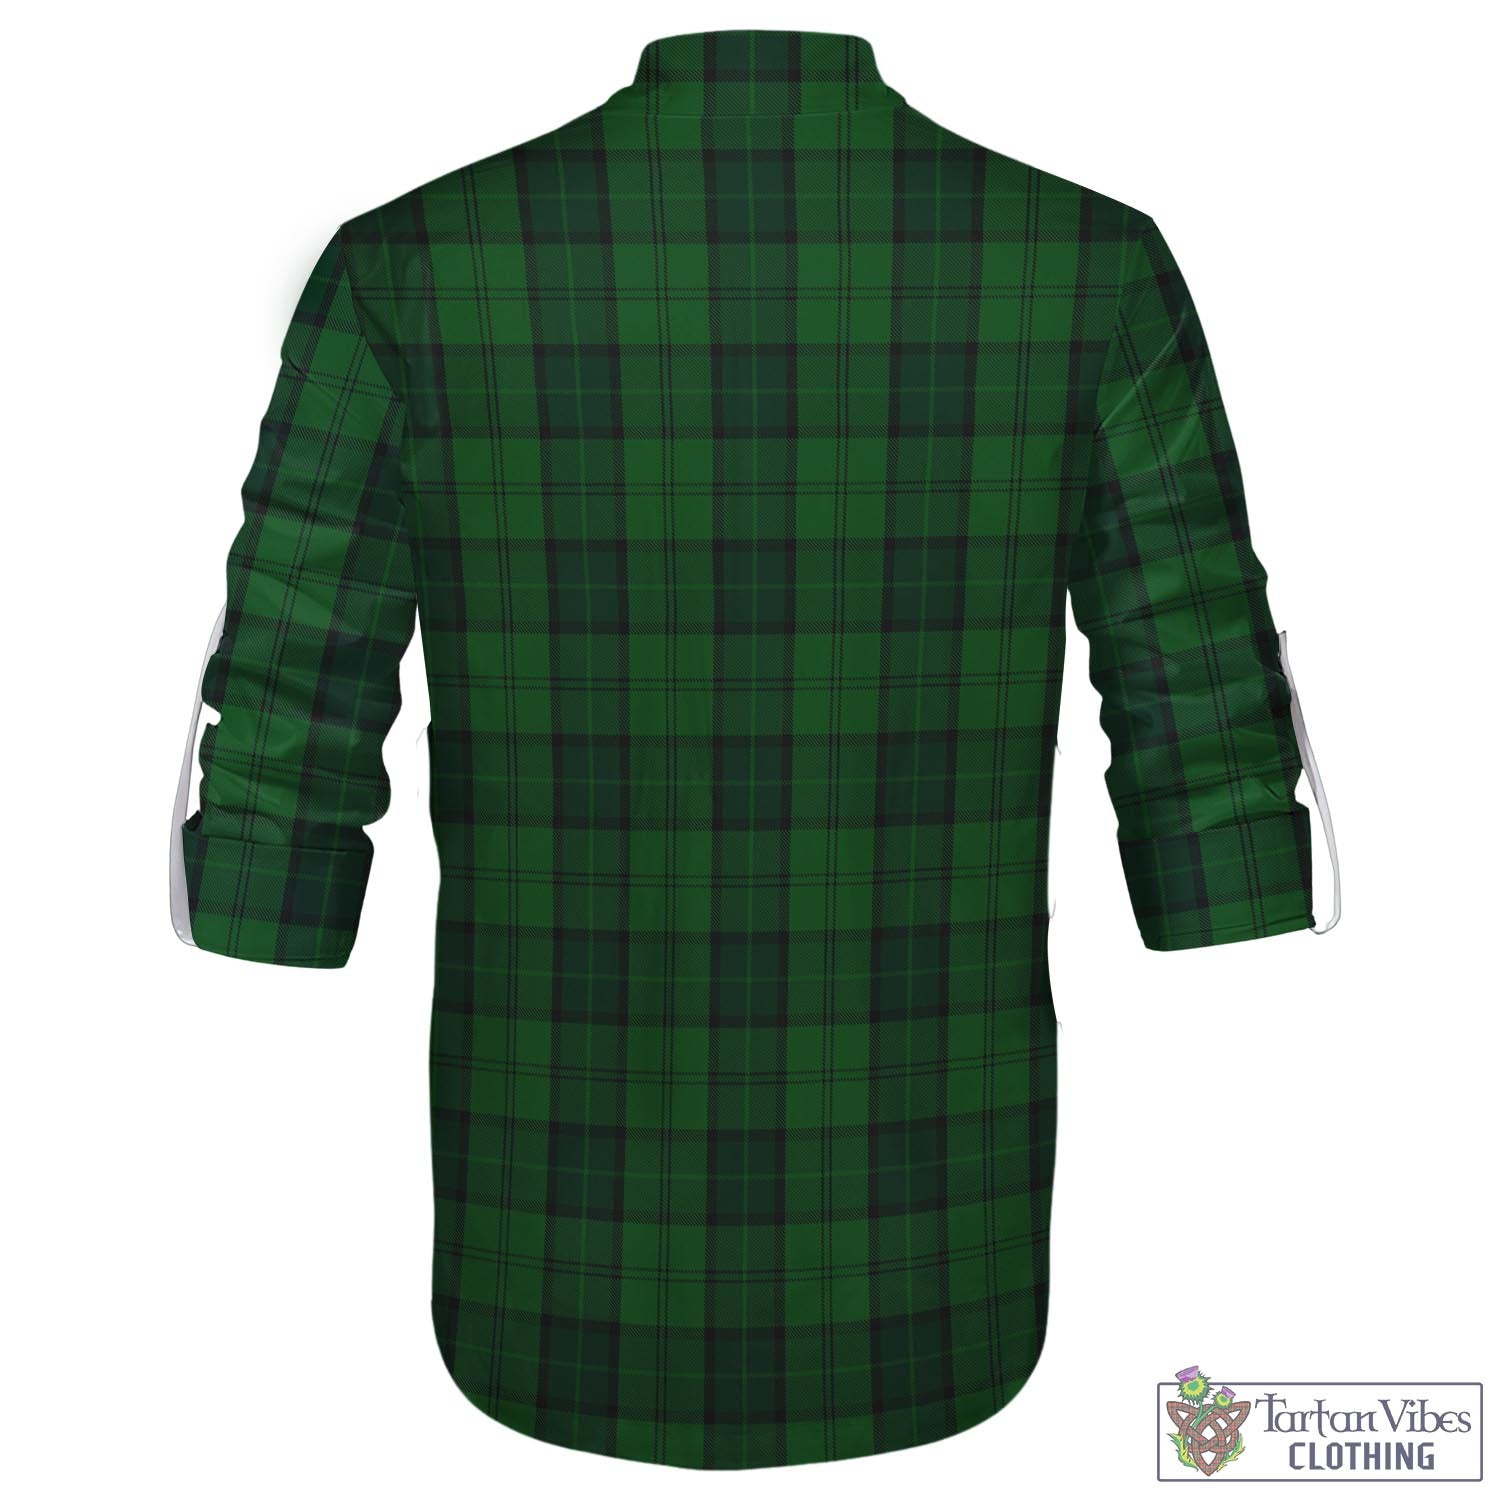 Tartan Vibes Clothing Dunbar Hunting Tartan Men's Scottish Traditional Jacobite Ghillie Kilt Shirt with Family Crest